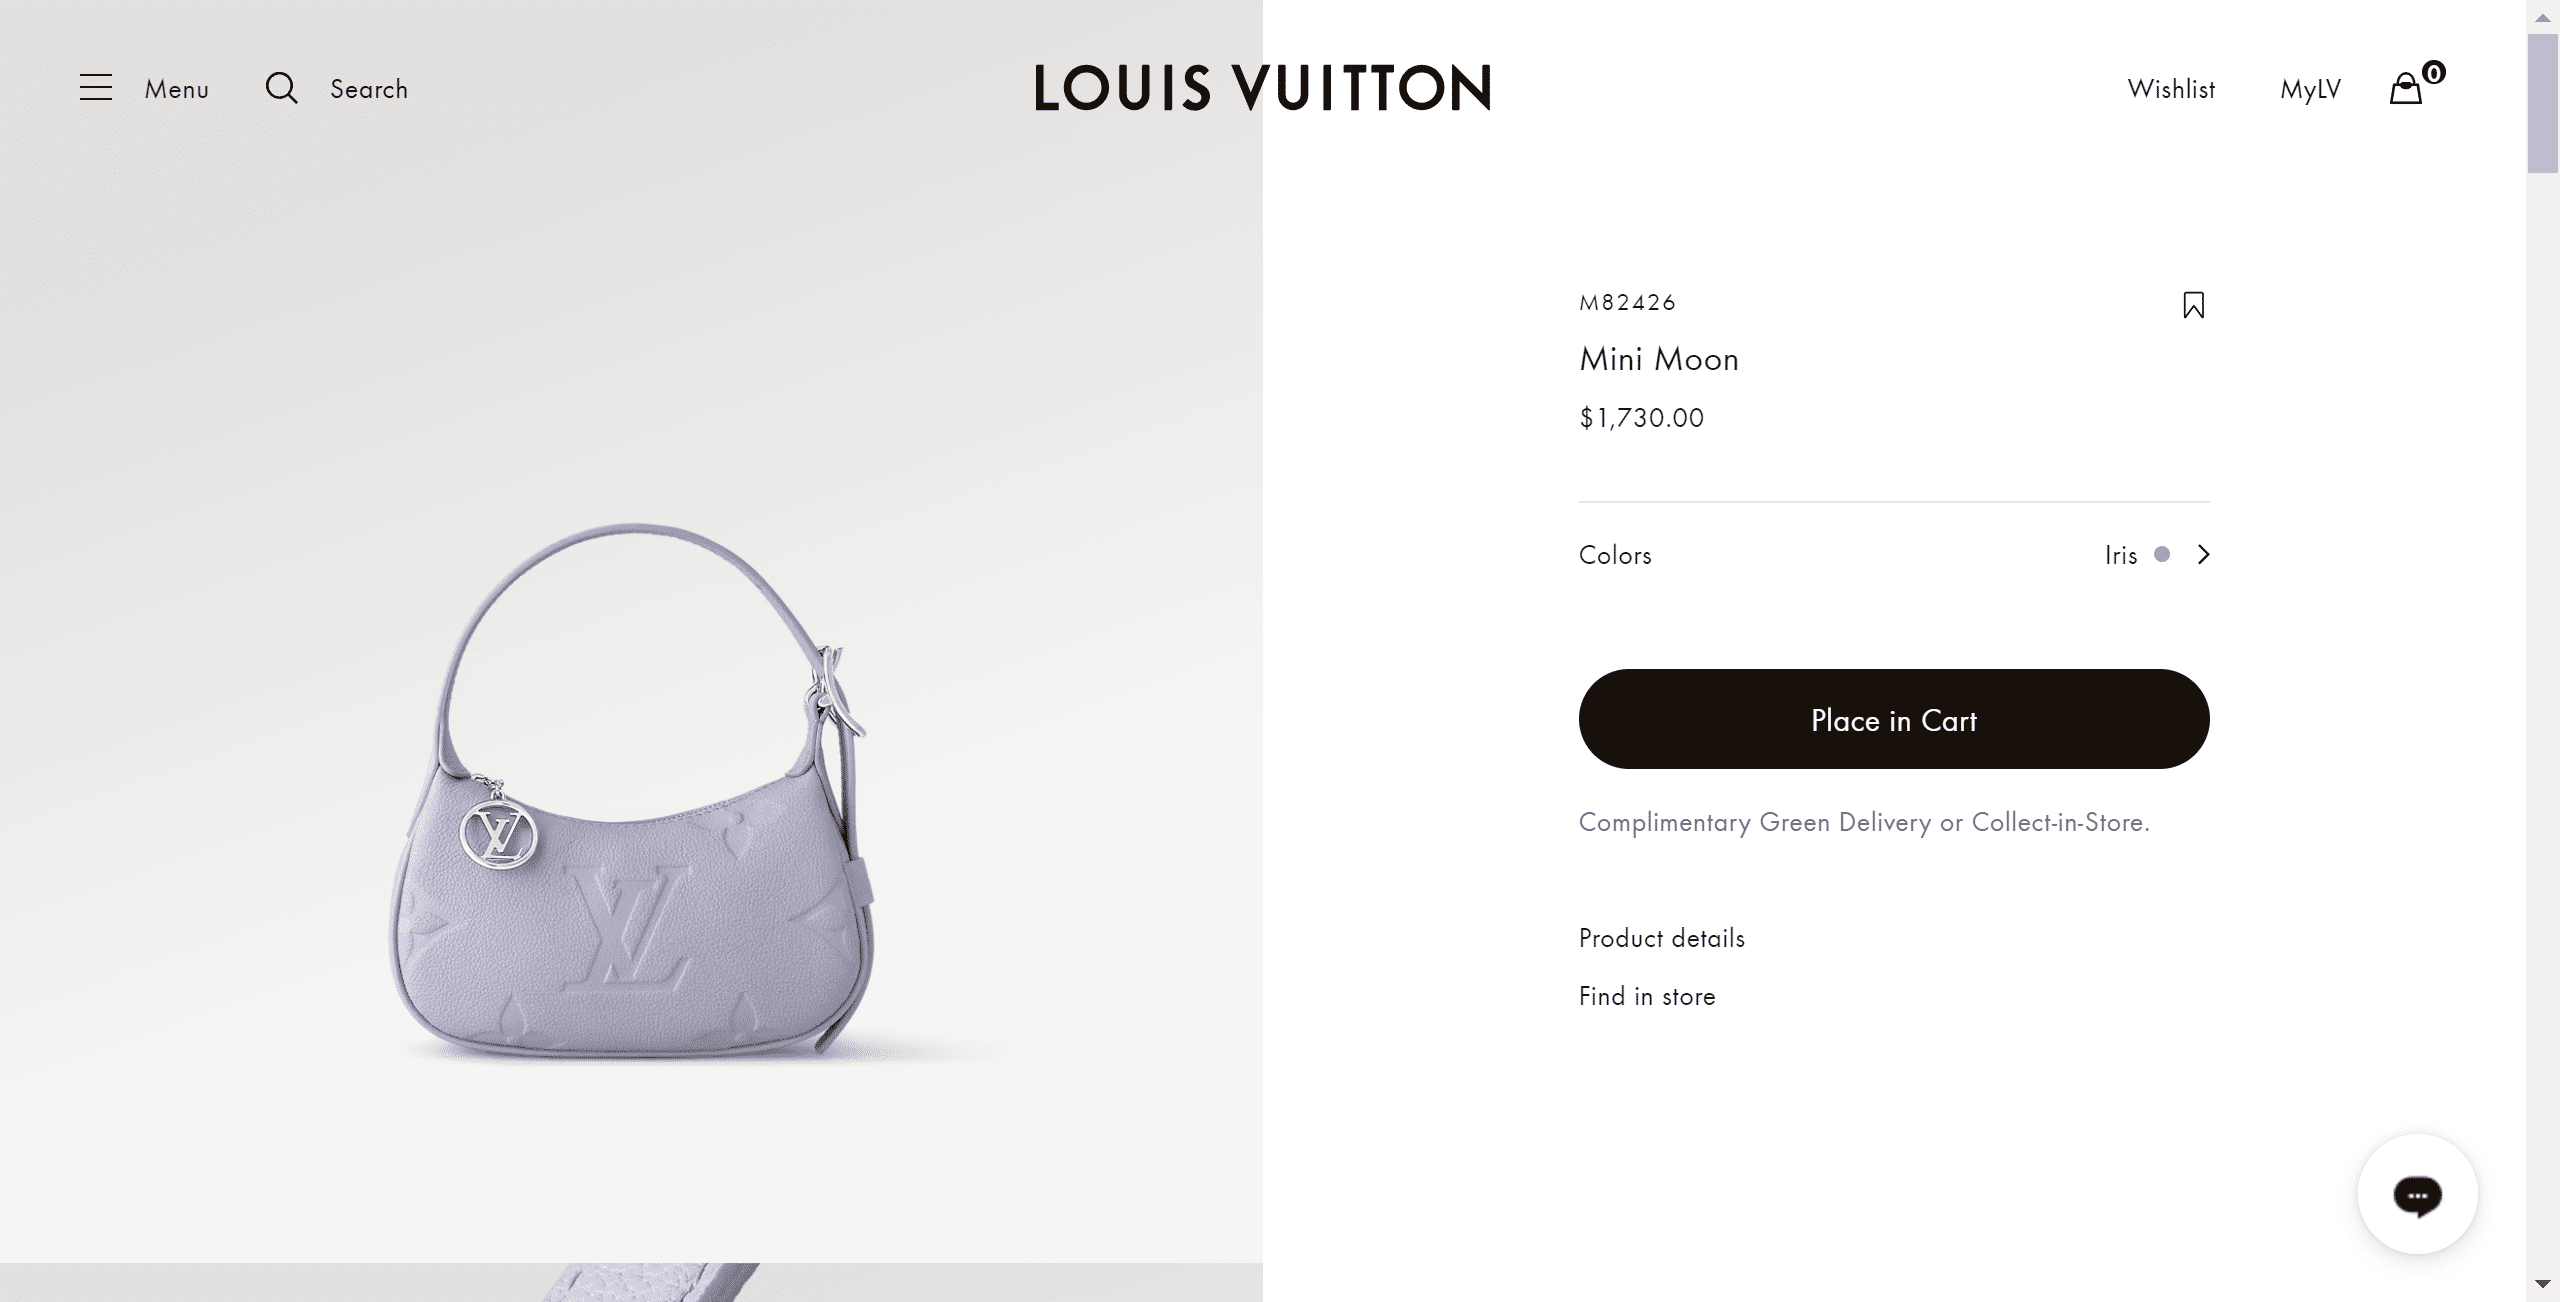 Louis Vuitton Mini Moon Iris